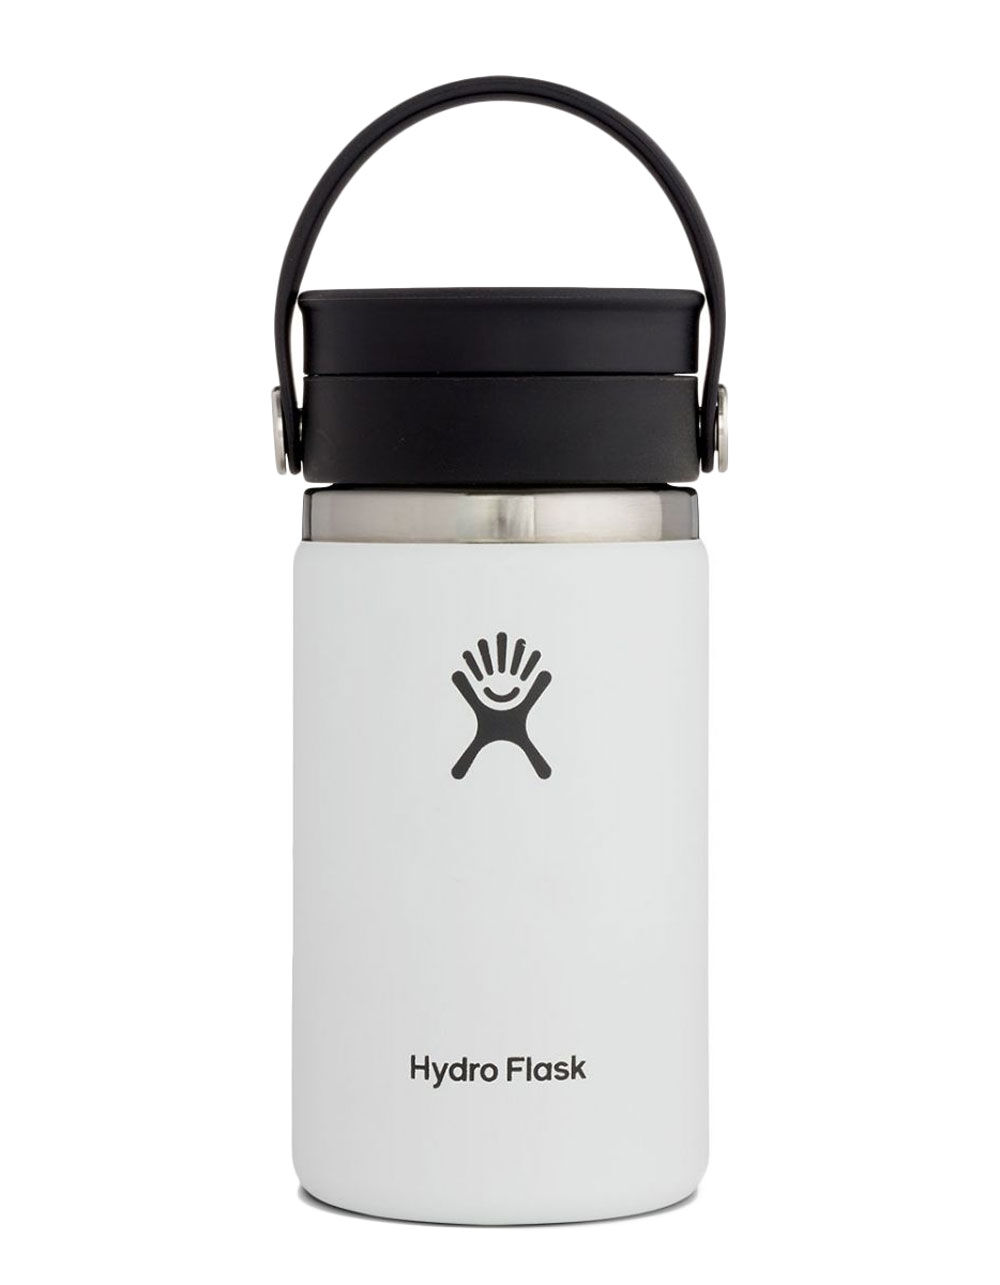 Hydro Flask Tumbler Lid – Leaf in Creek